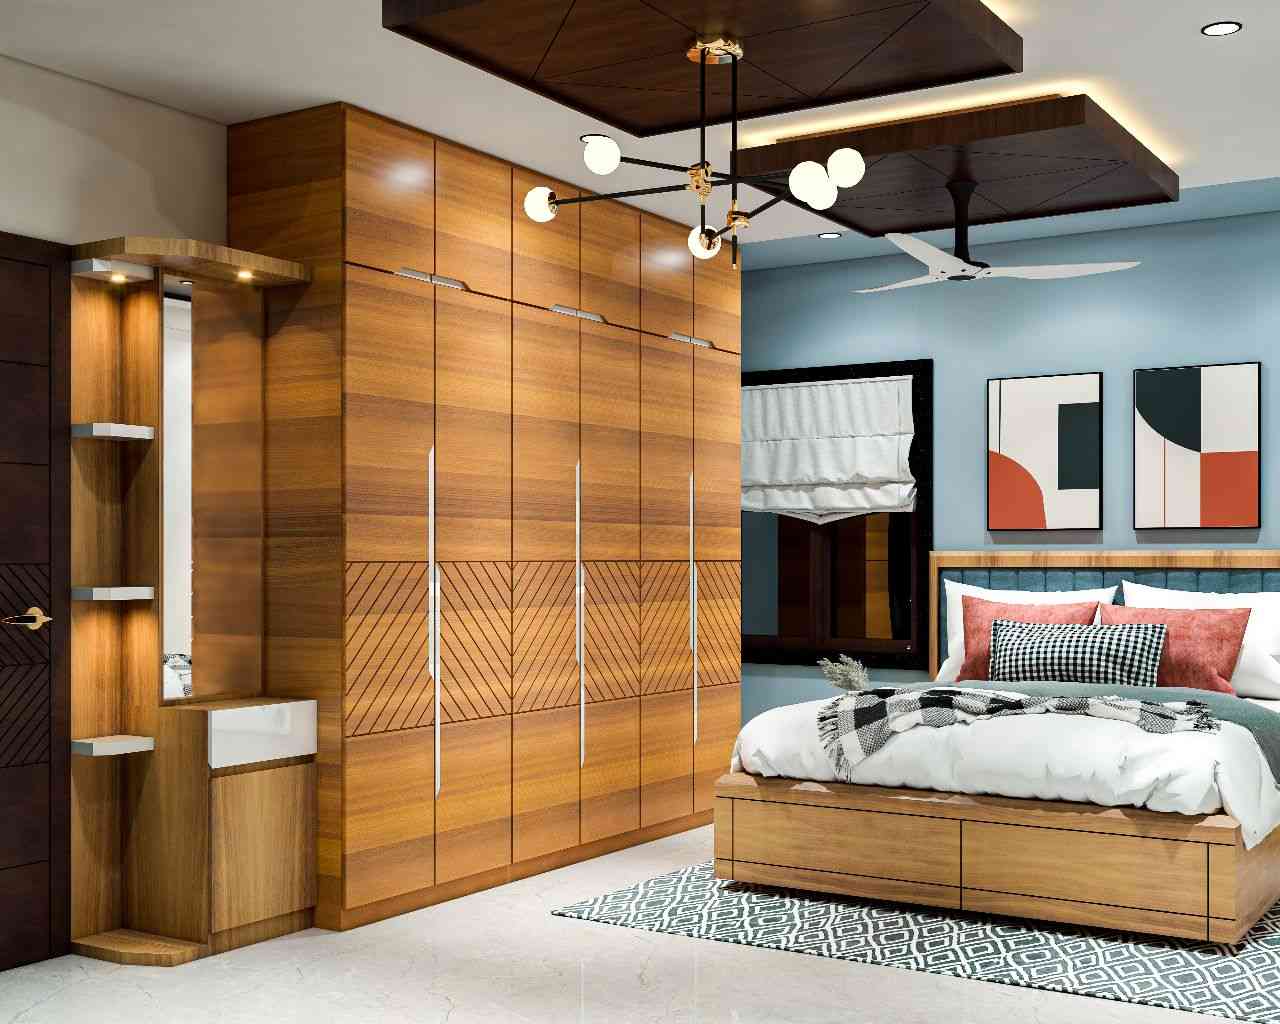 Bedroom Design With Wooden Wardrobe